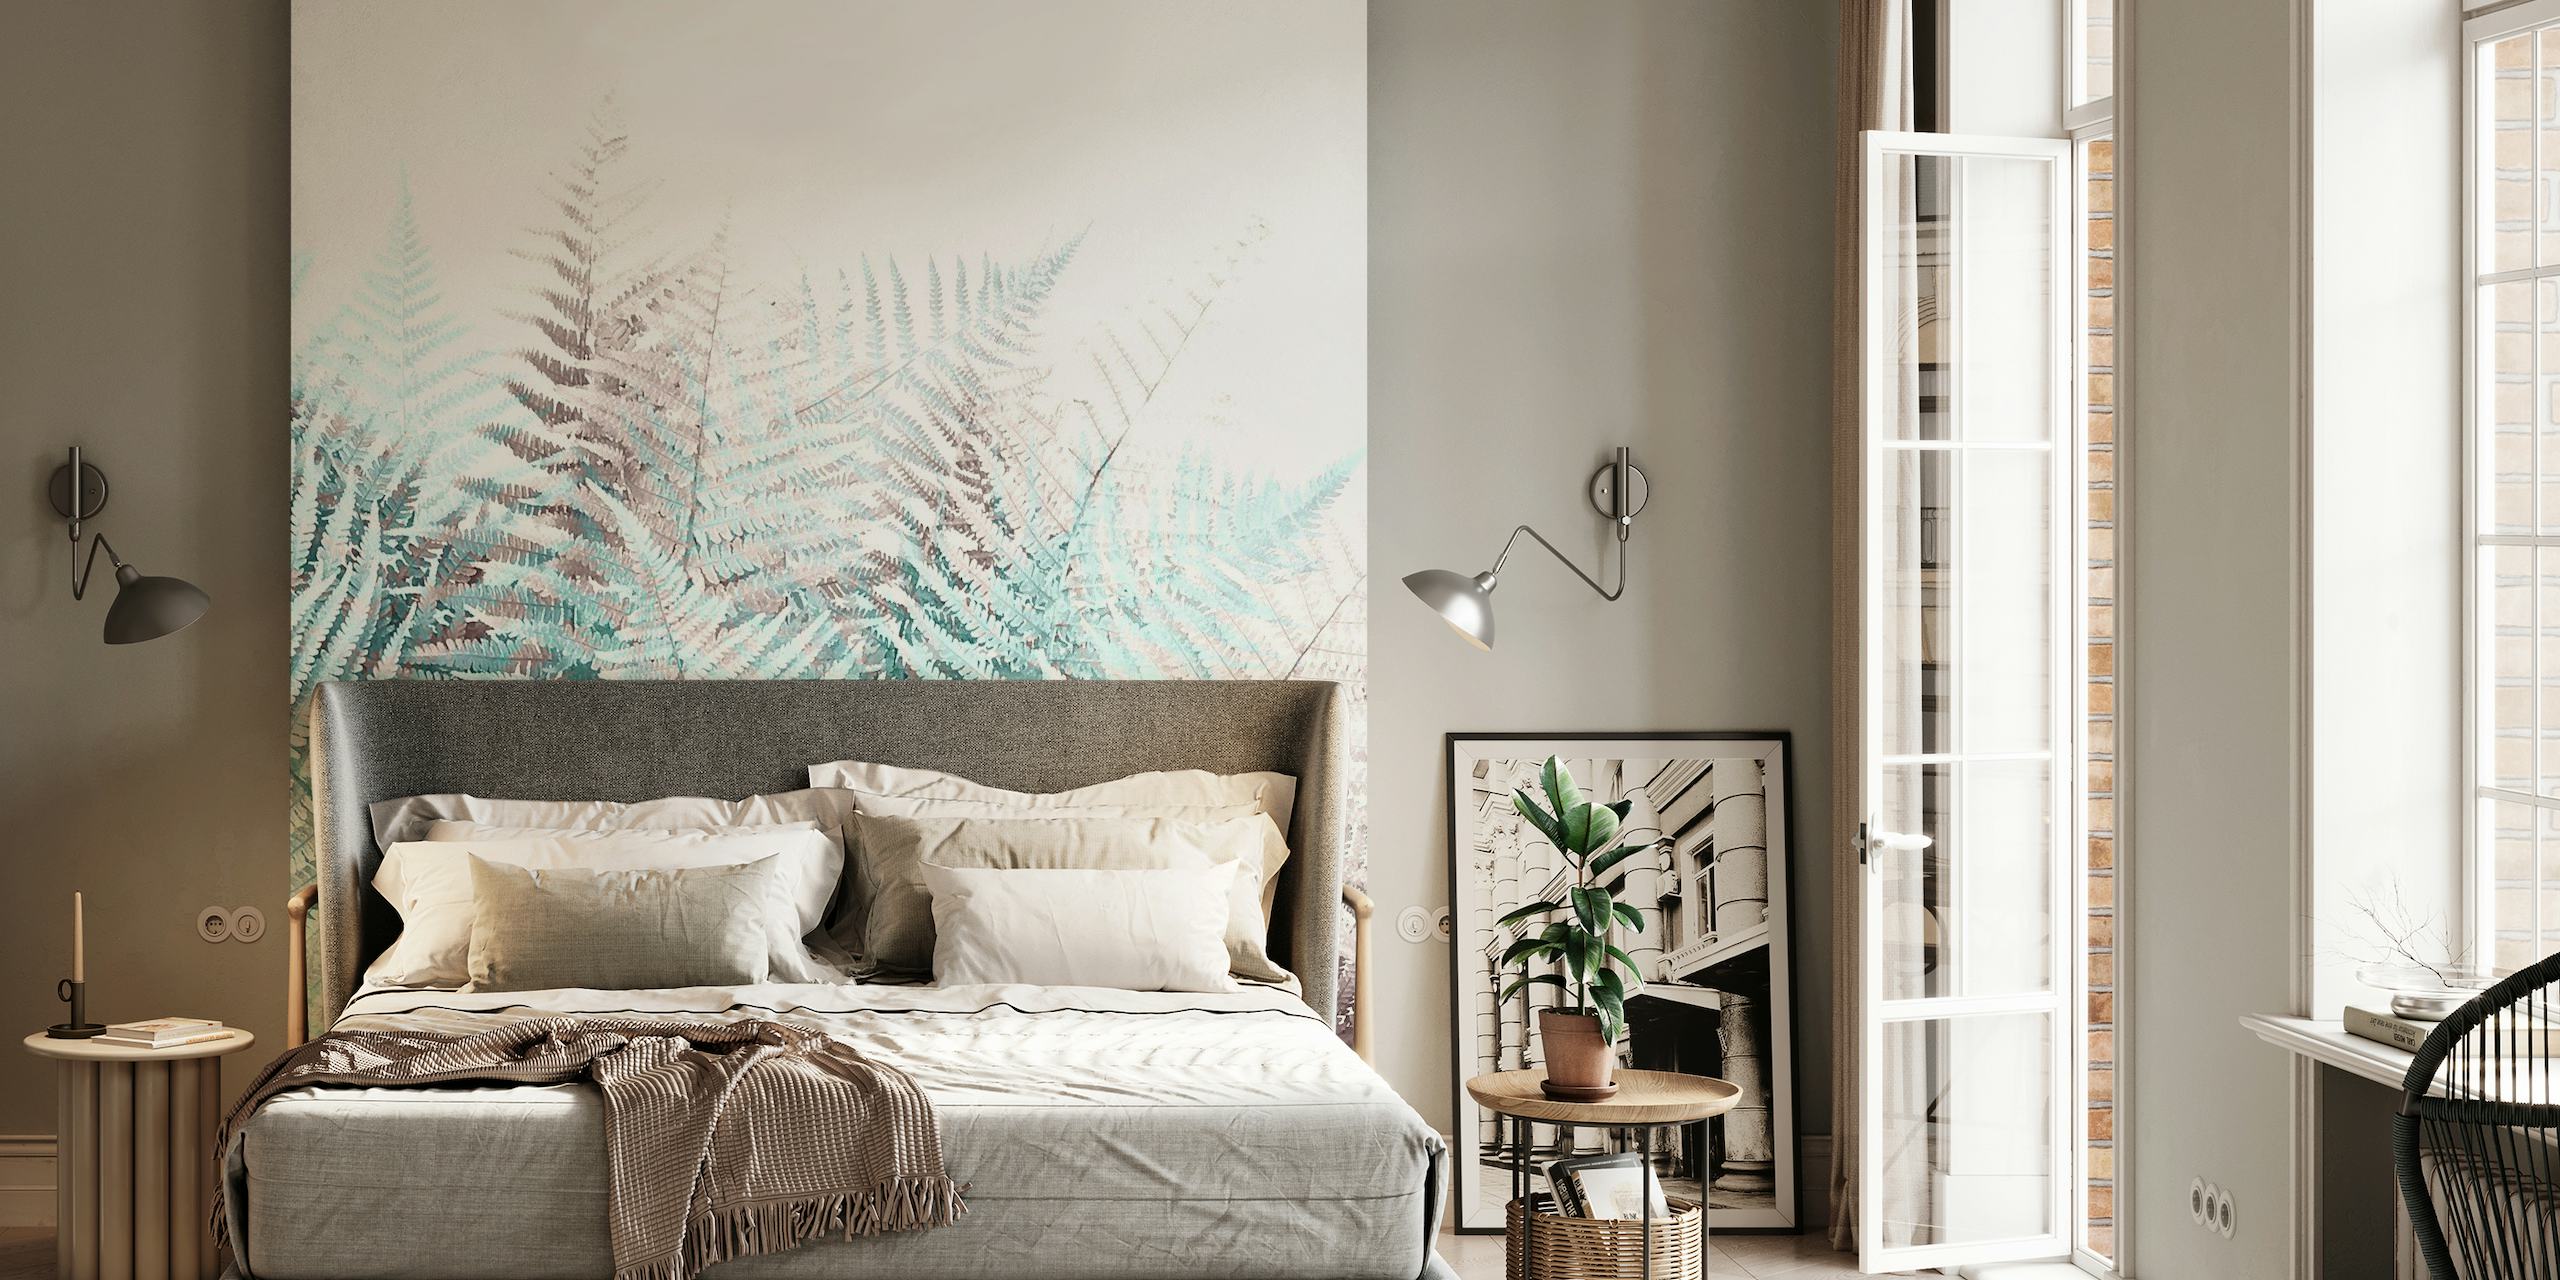 Soft Fern Foliage Duotone vægmaleri med aqua og blush toner